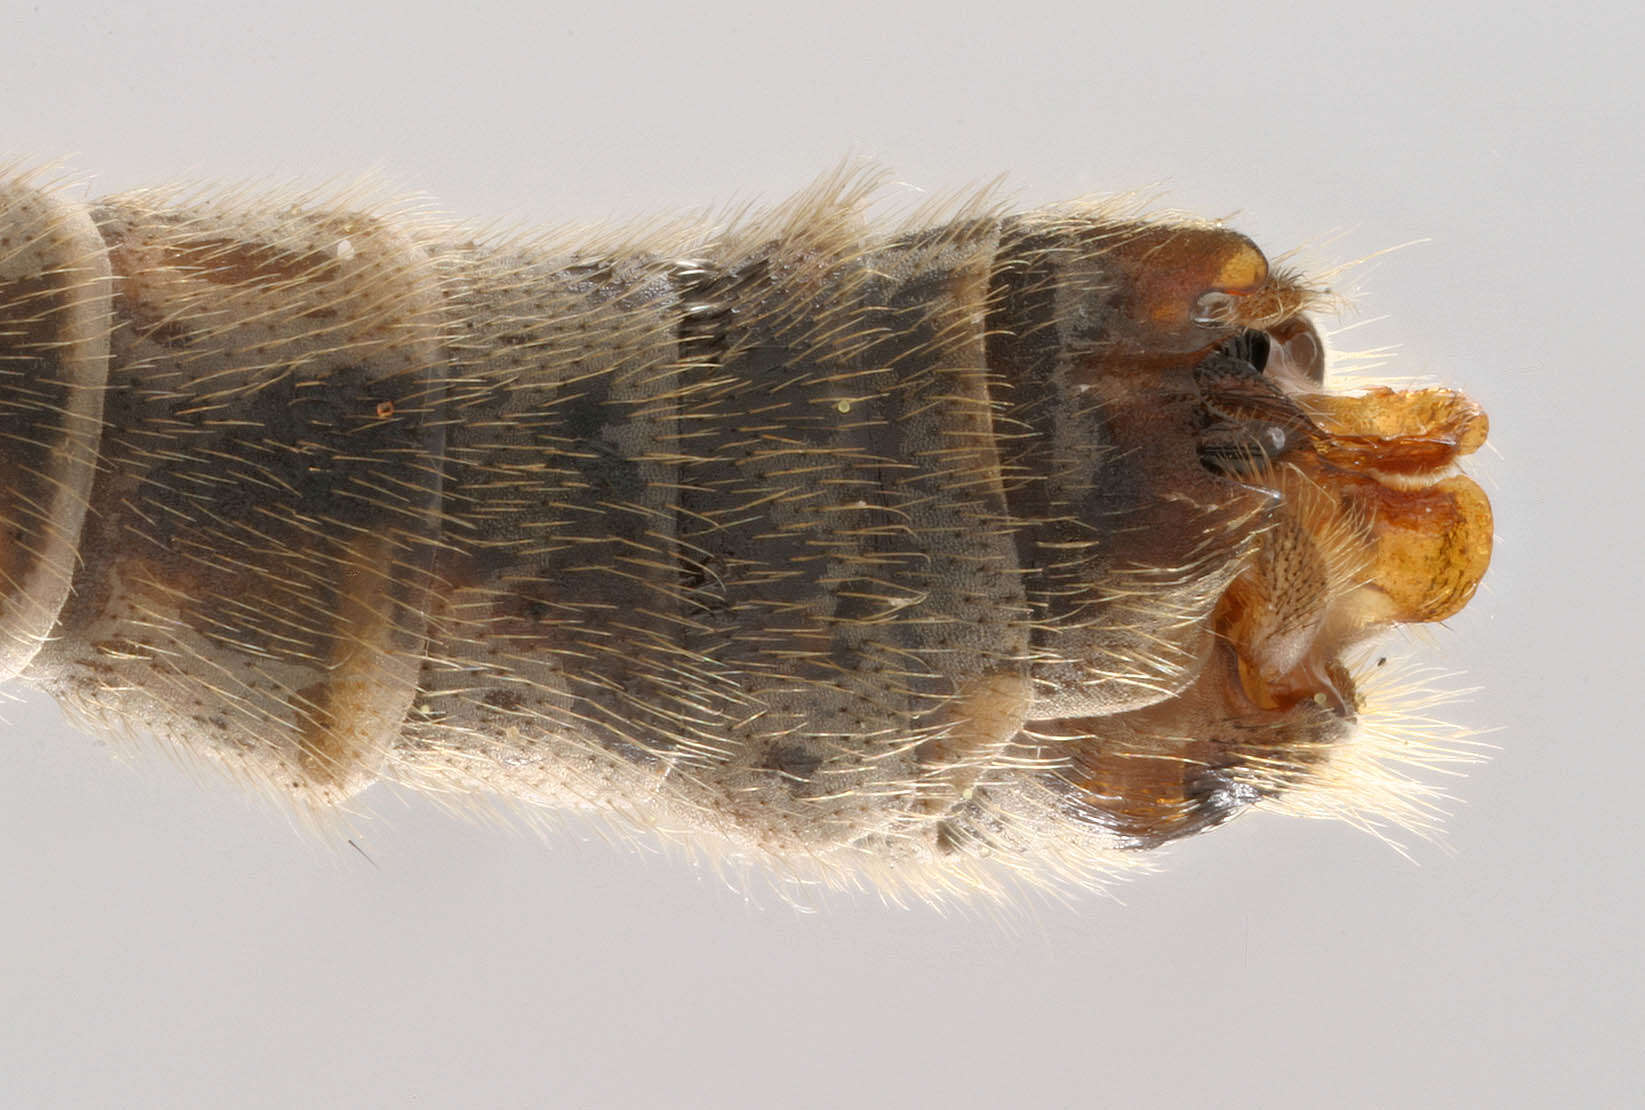 Image de Tipula (Pterelachisus) pabulina Meigen 1818